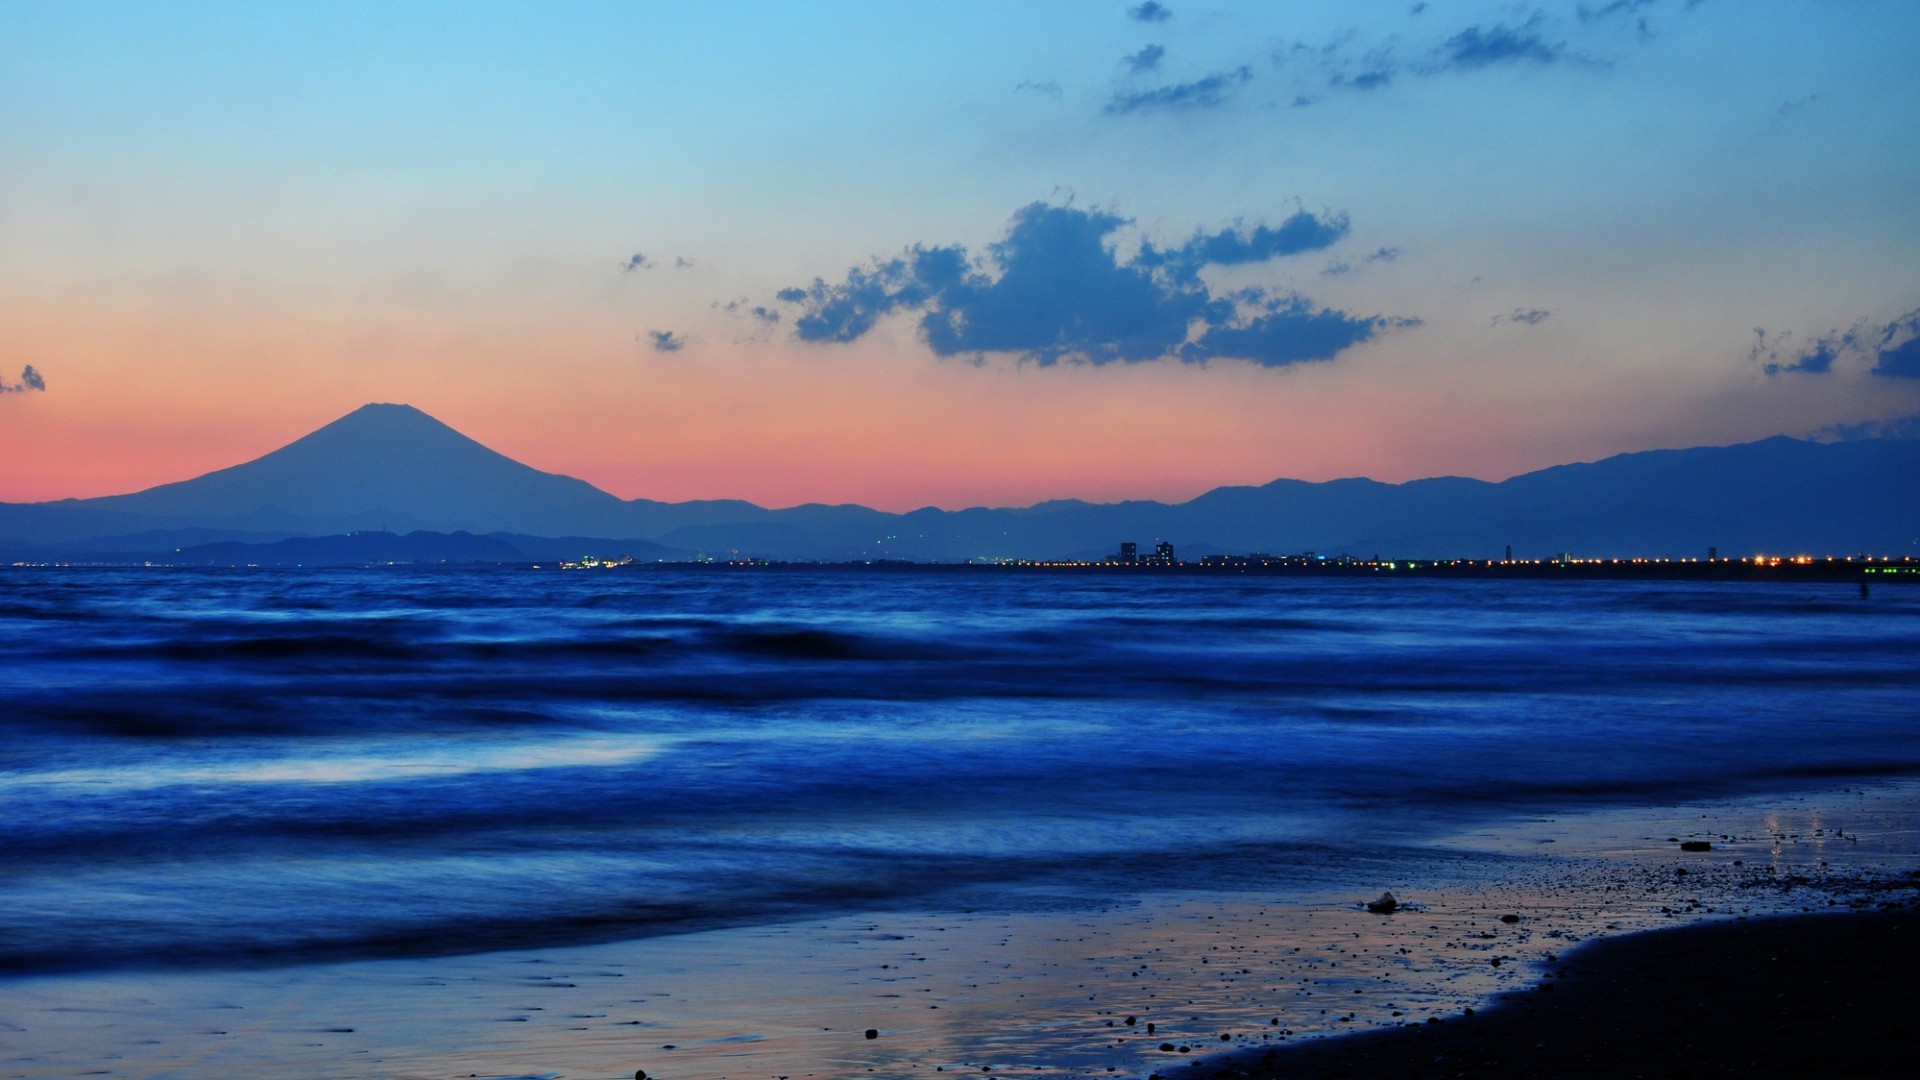 View of Mt Fuji from the Shonan coast